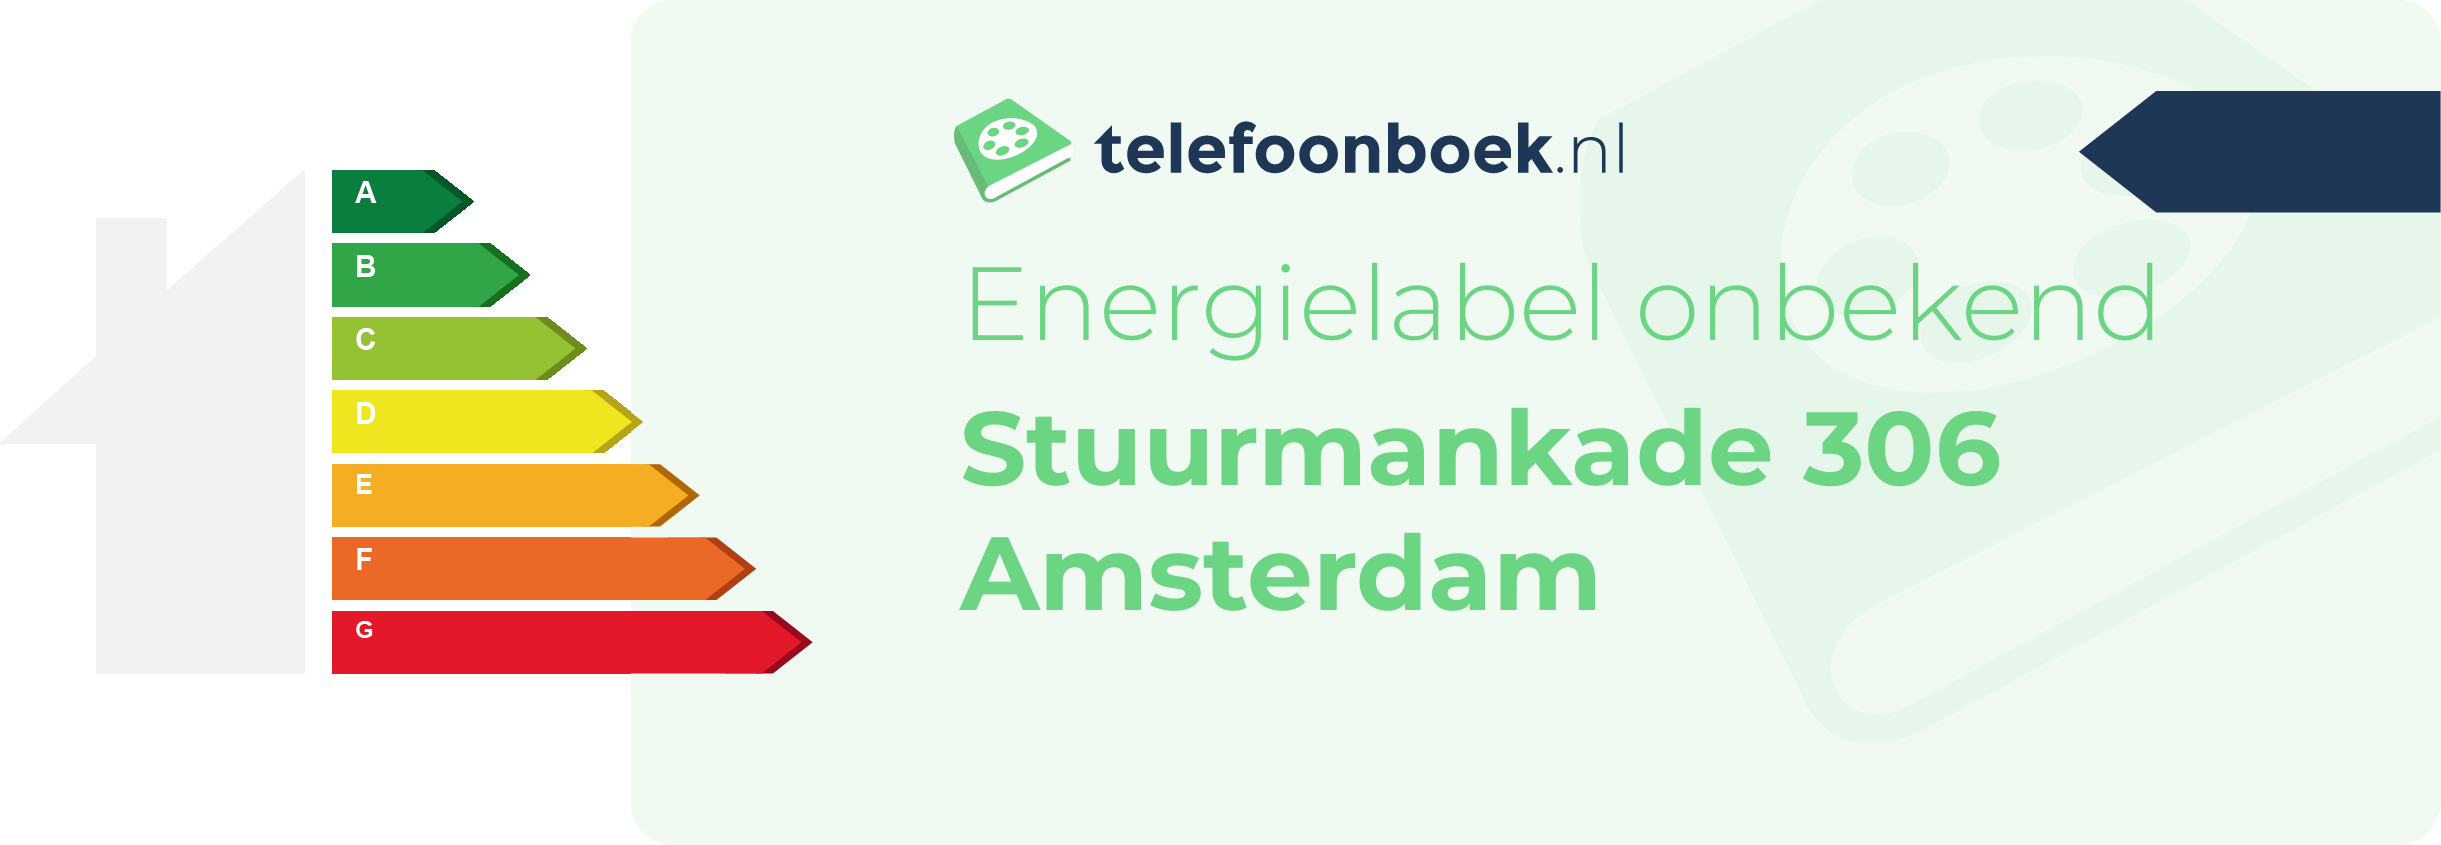 Energielabel Stuurmankade 306 Amsterdam